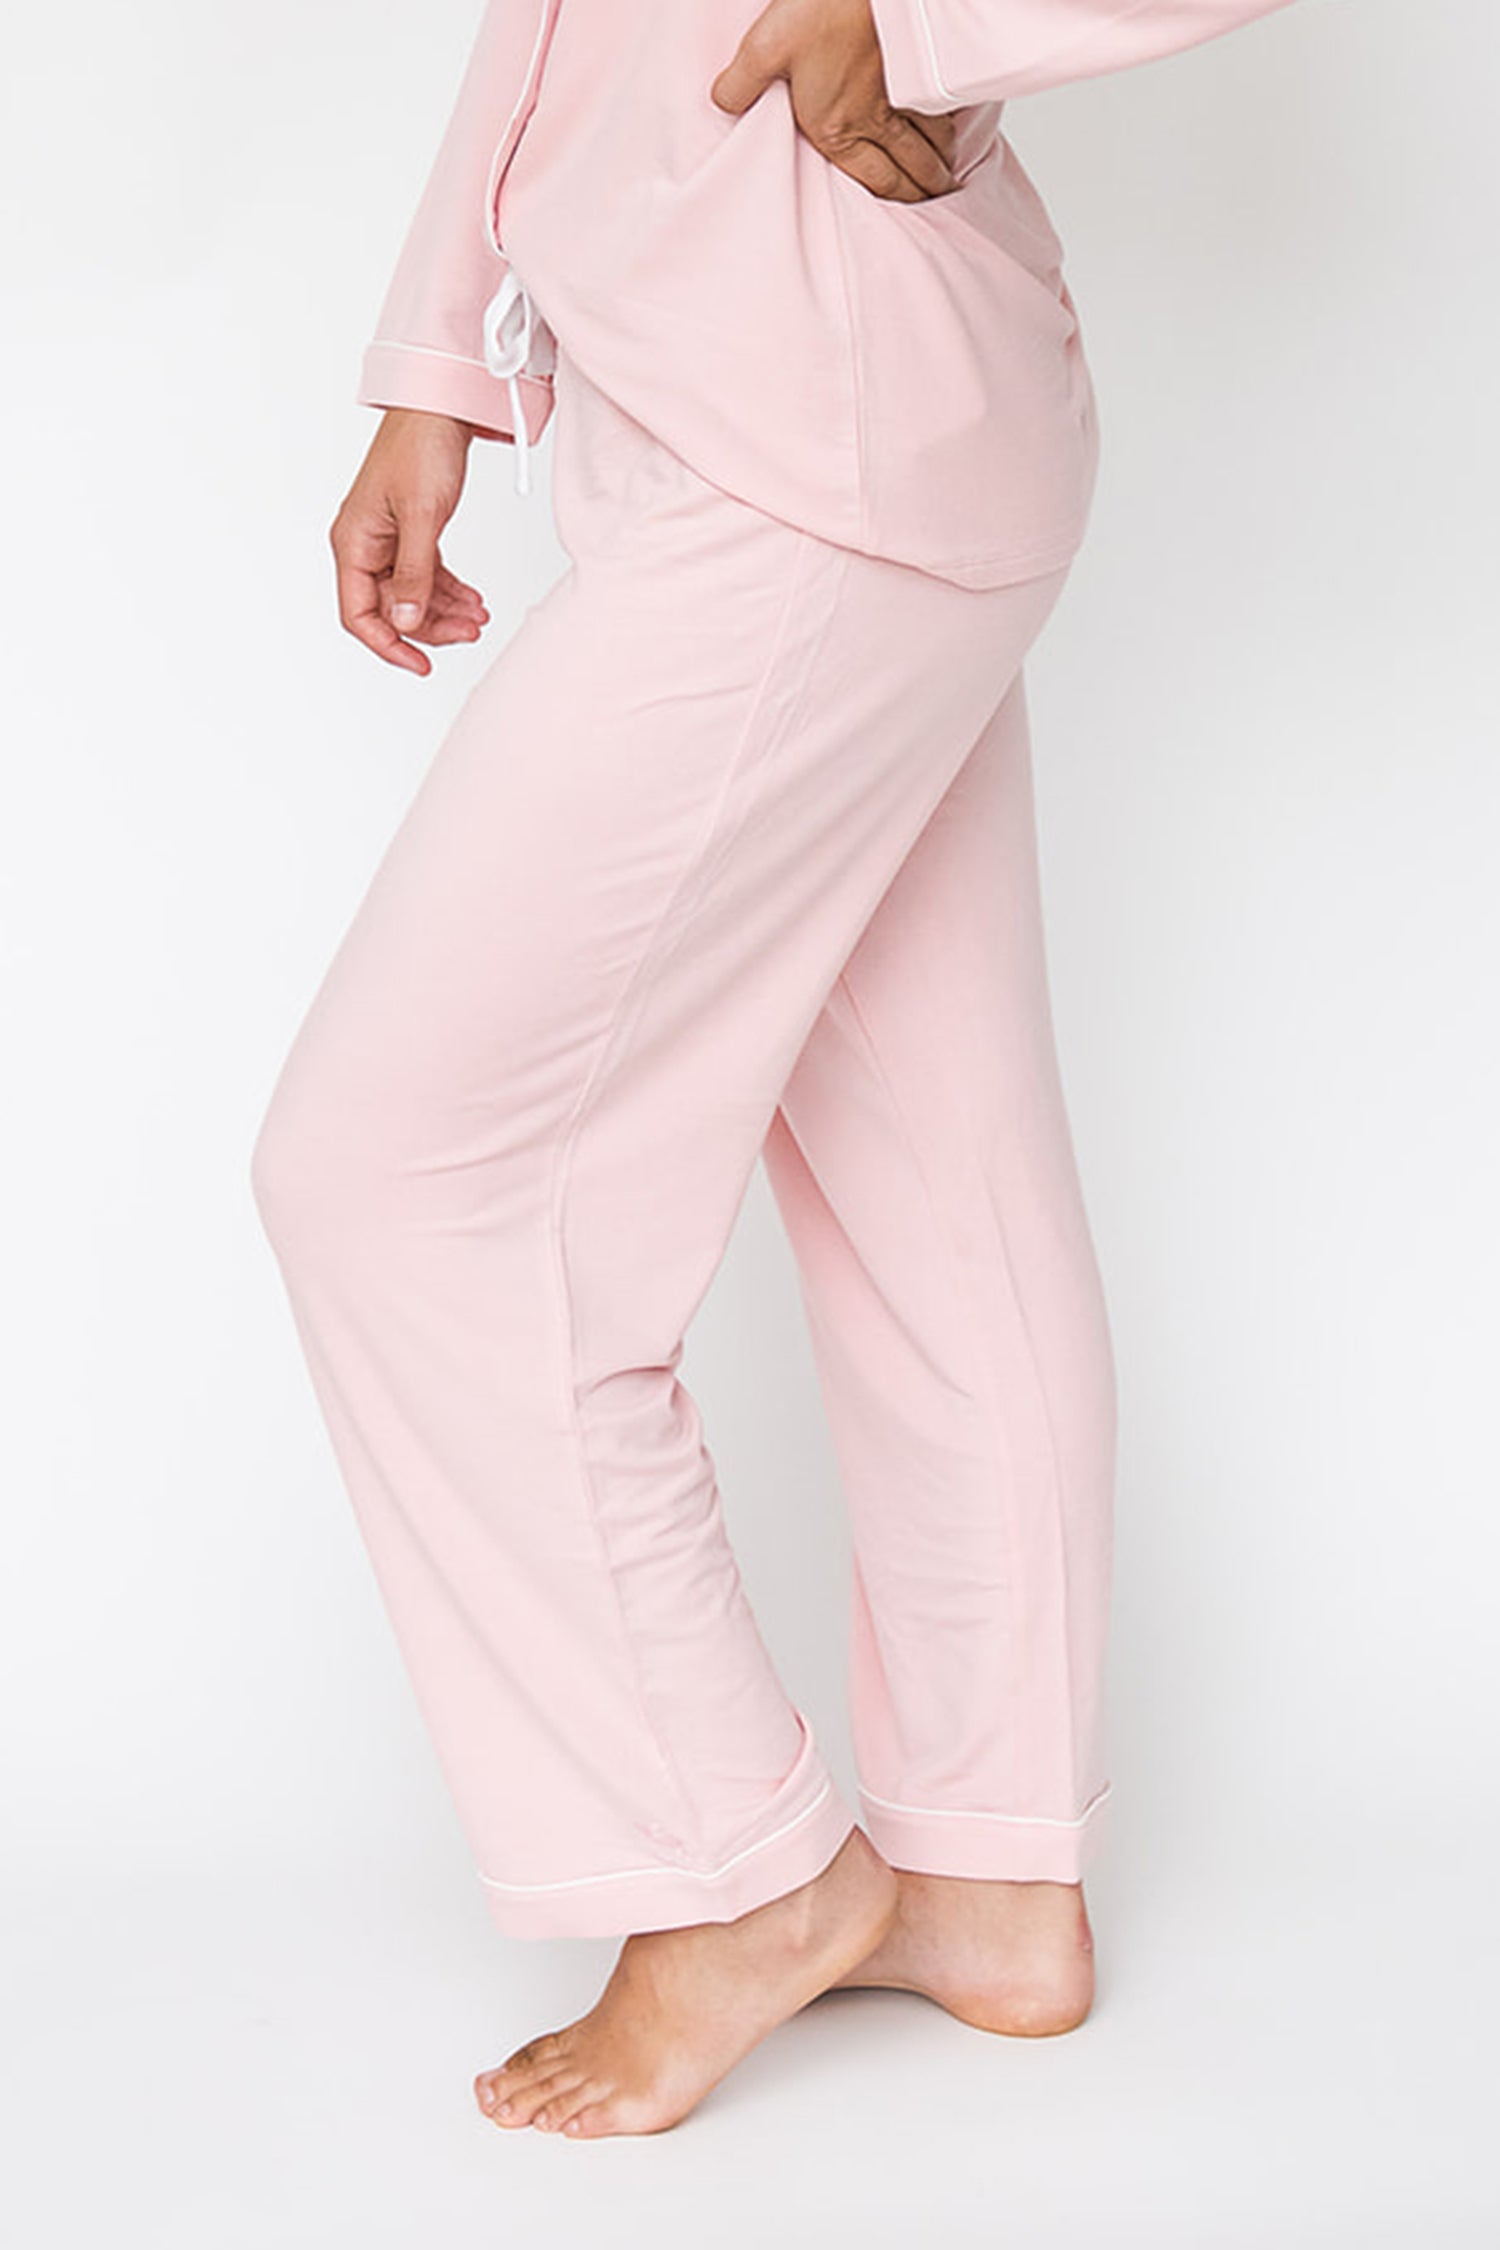 Korrah Pajama Pants Contrast Piping